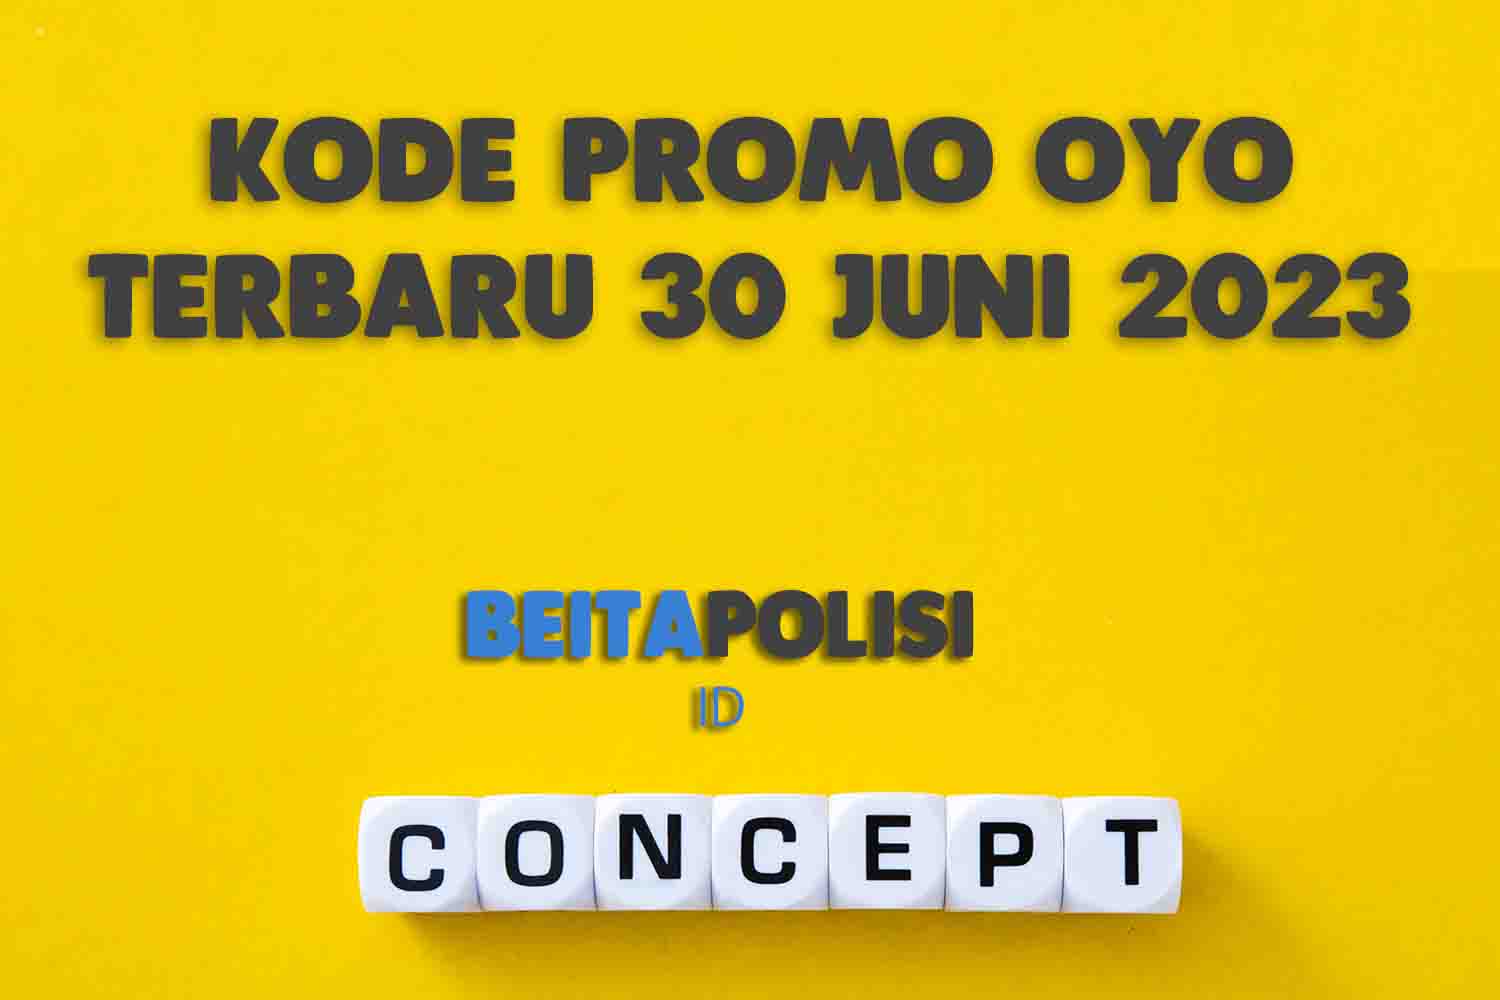 Kode Promo Oyo Terbaru 30 Juni 2023